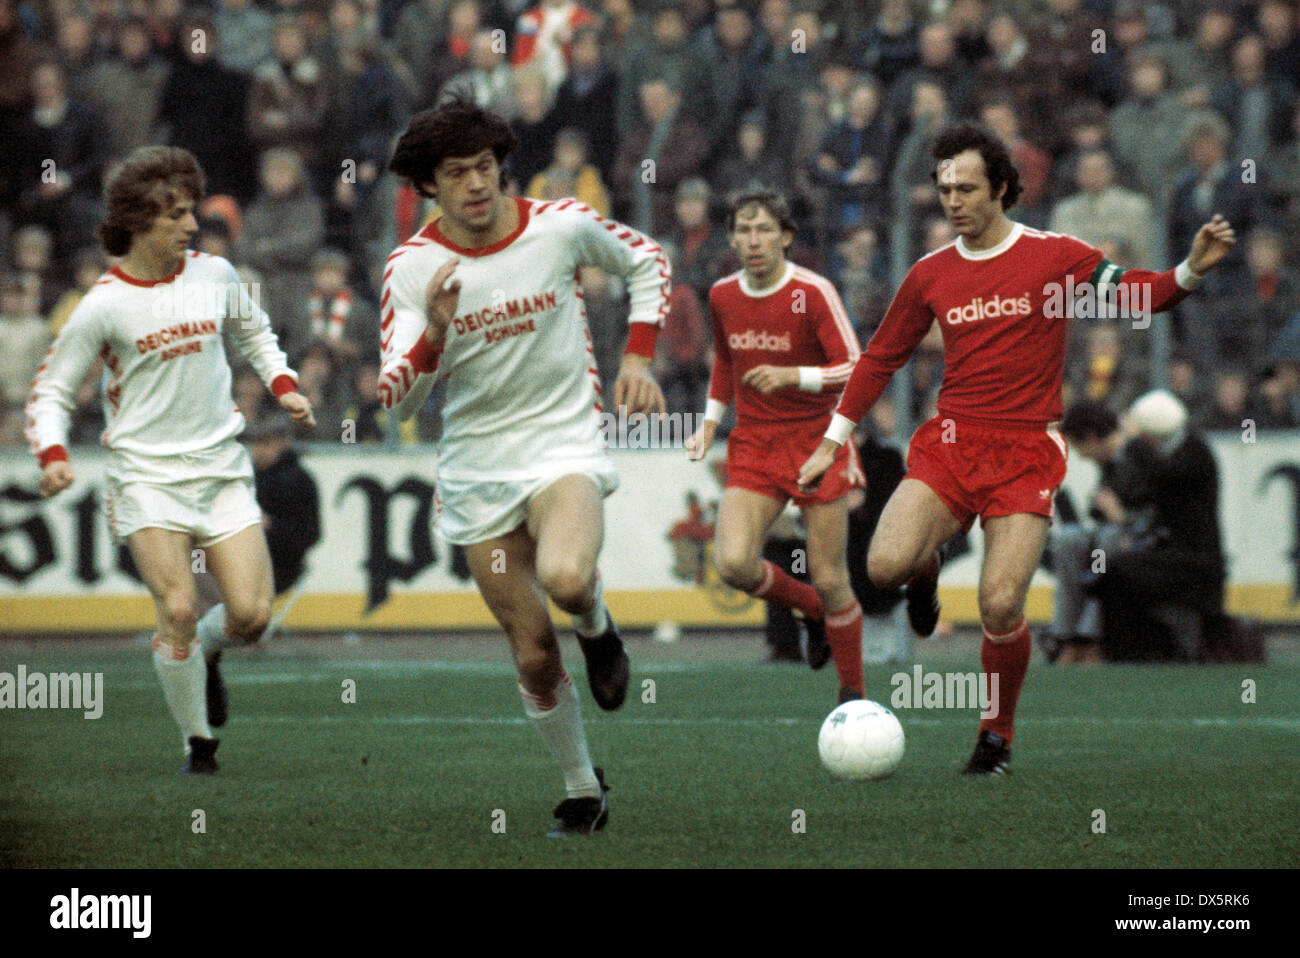 Football, Bundesliga, 1976/1977, Georg Melches Stadium, Rot Weiss Essen contre FC Bayern Munich 1:4, scène du match, f.l.t.r. Frank Mill (RWE), Werner Lorant (RWE), Conny Torstensson (FCB), Franz Beckenbauer (FCB) Banque D'Images